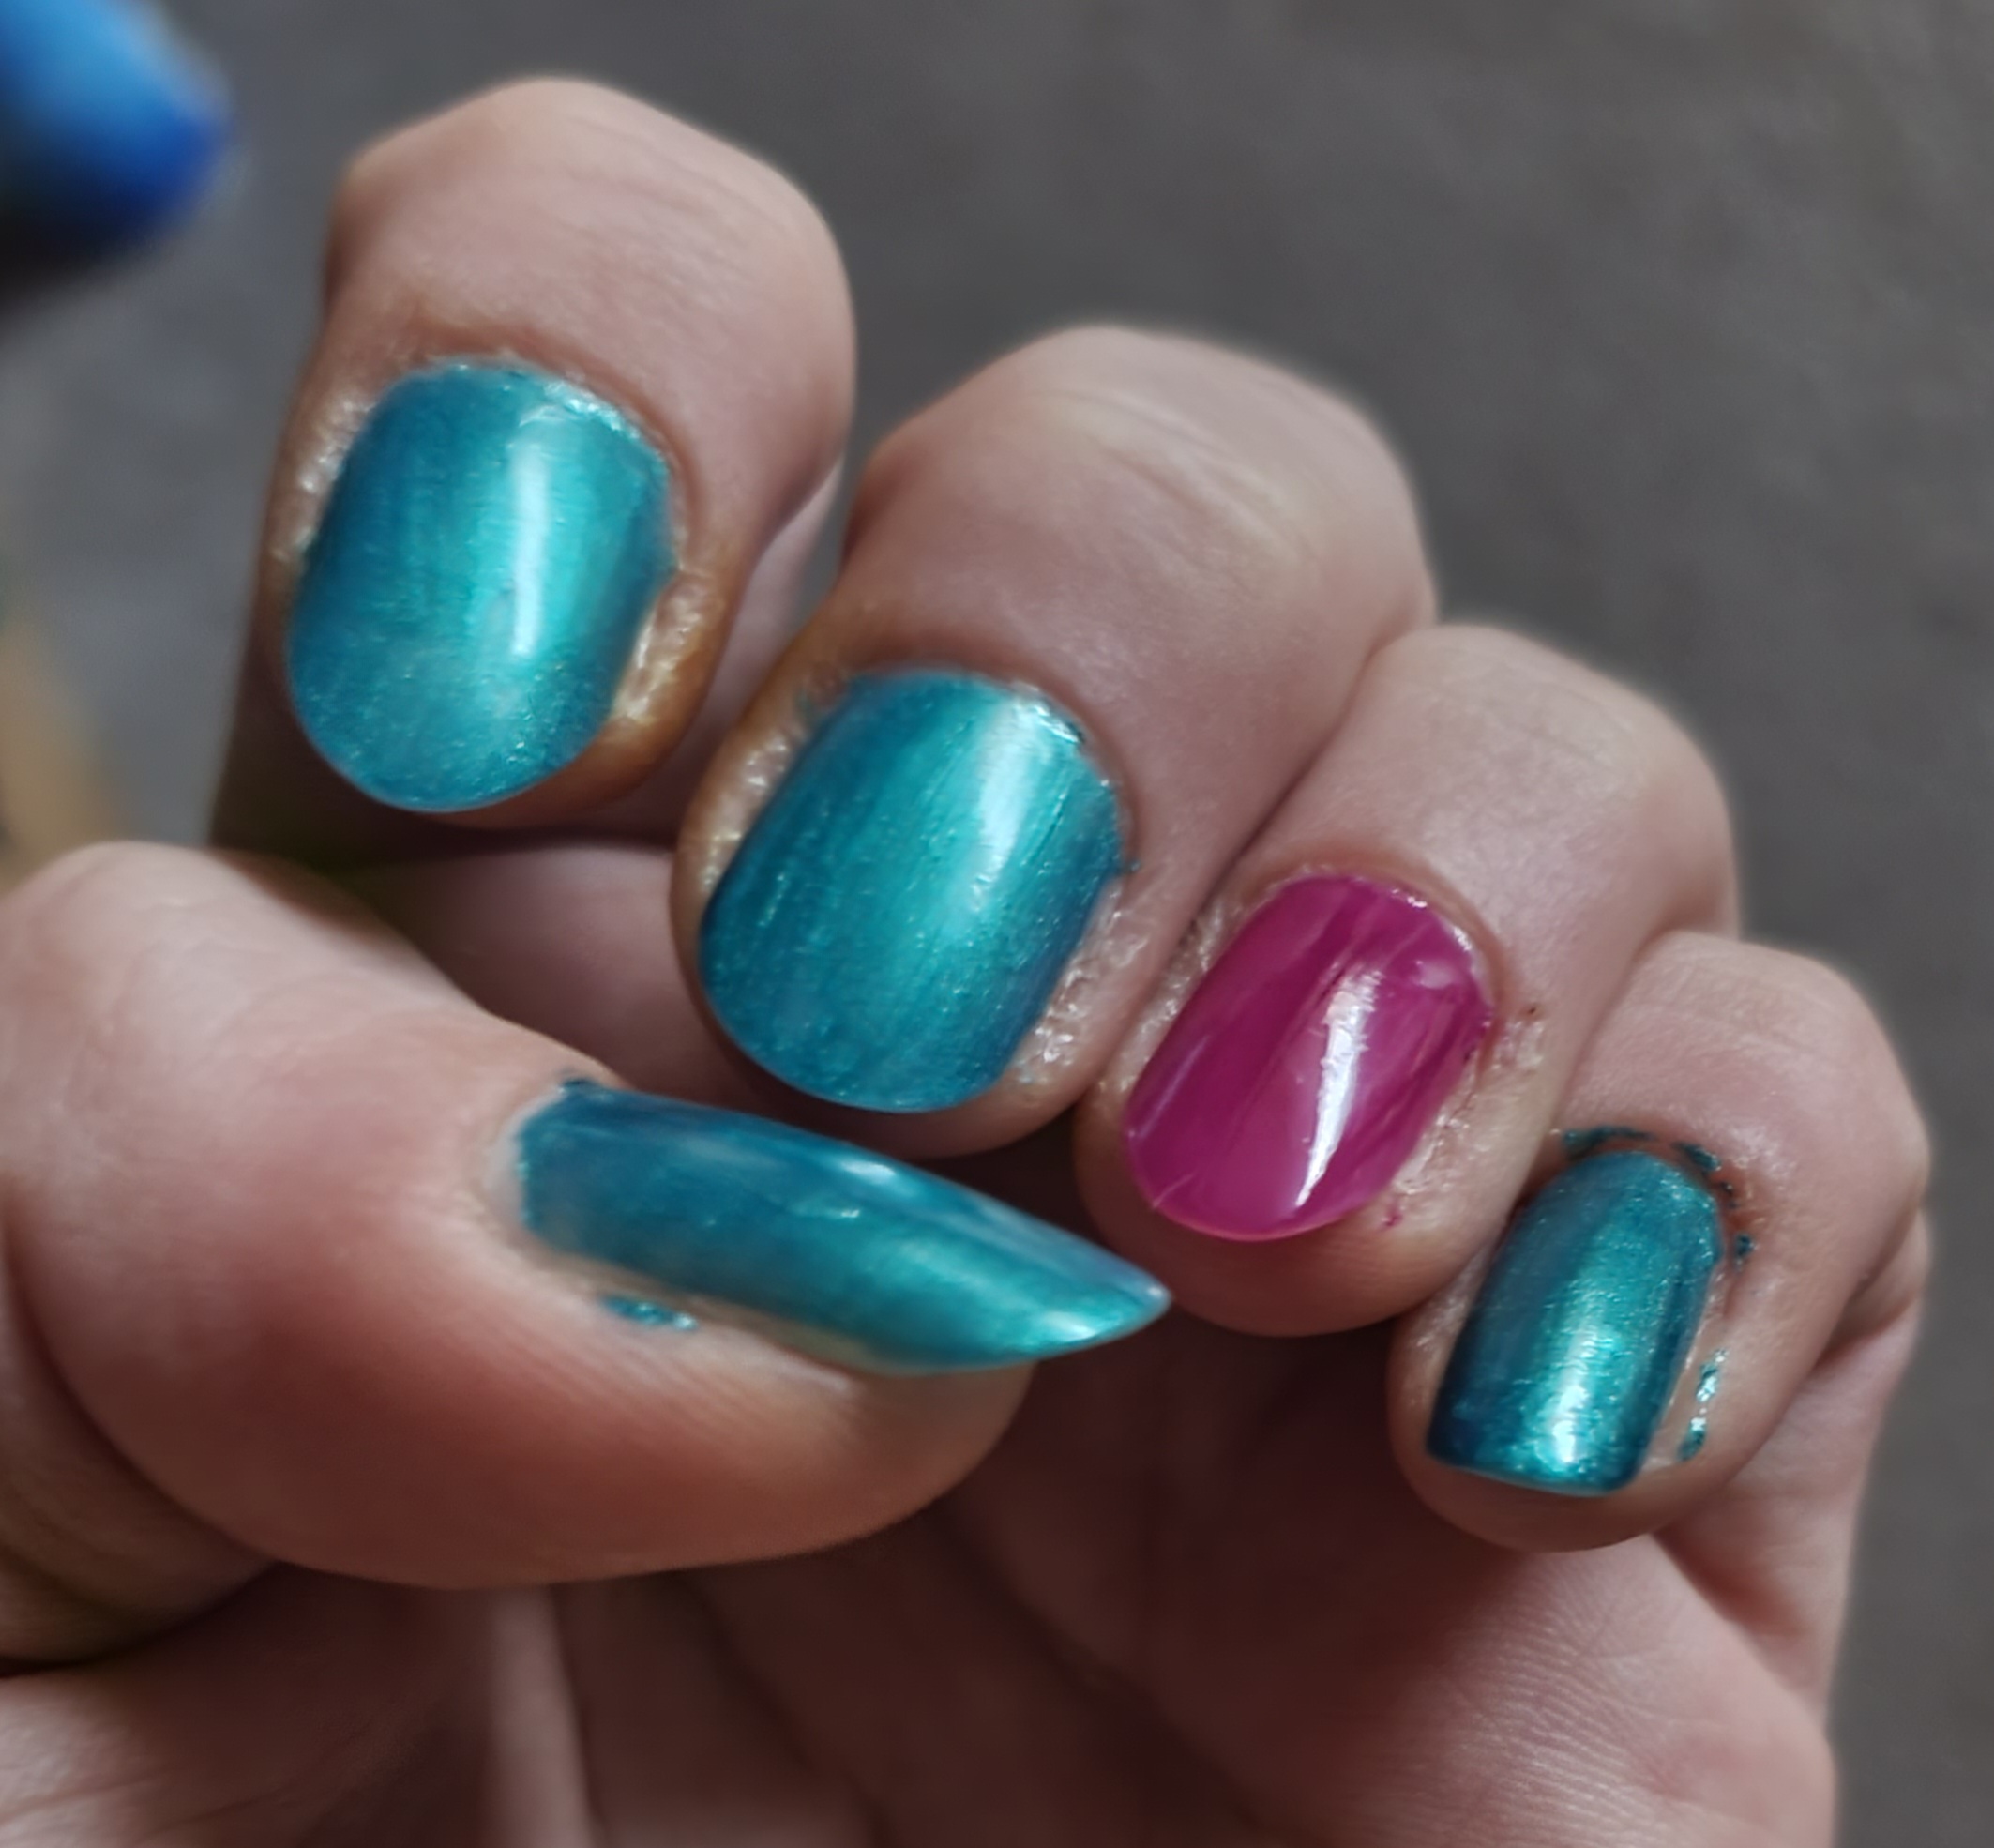 nails painted shiny blue and magenta